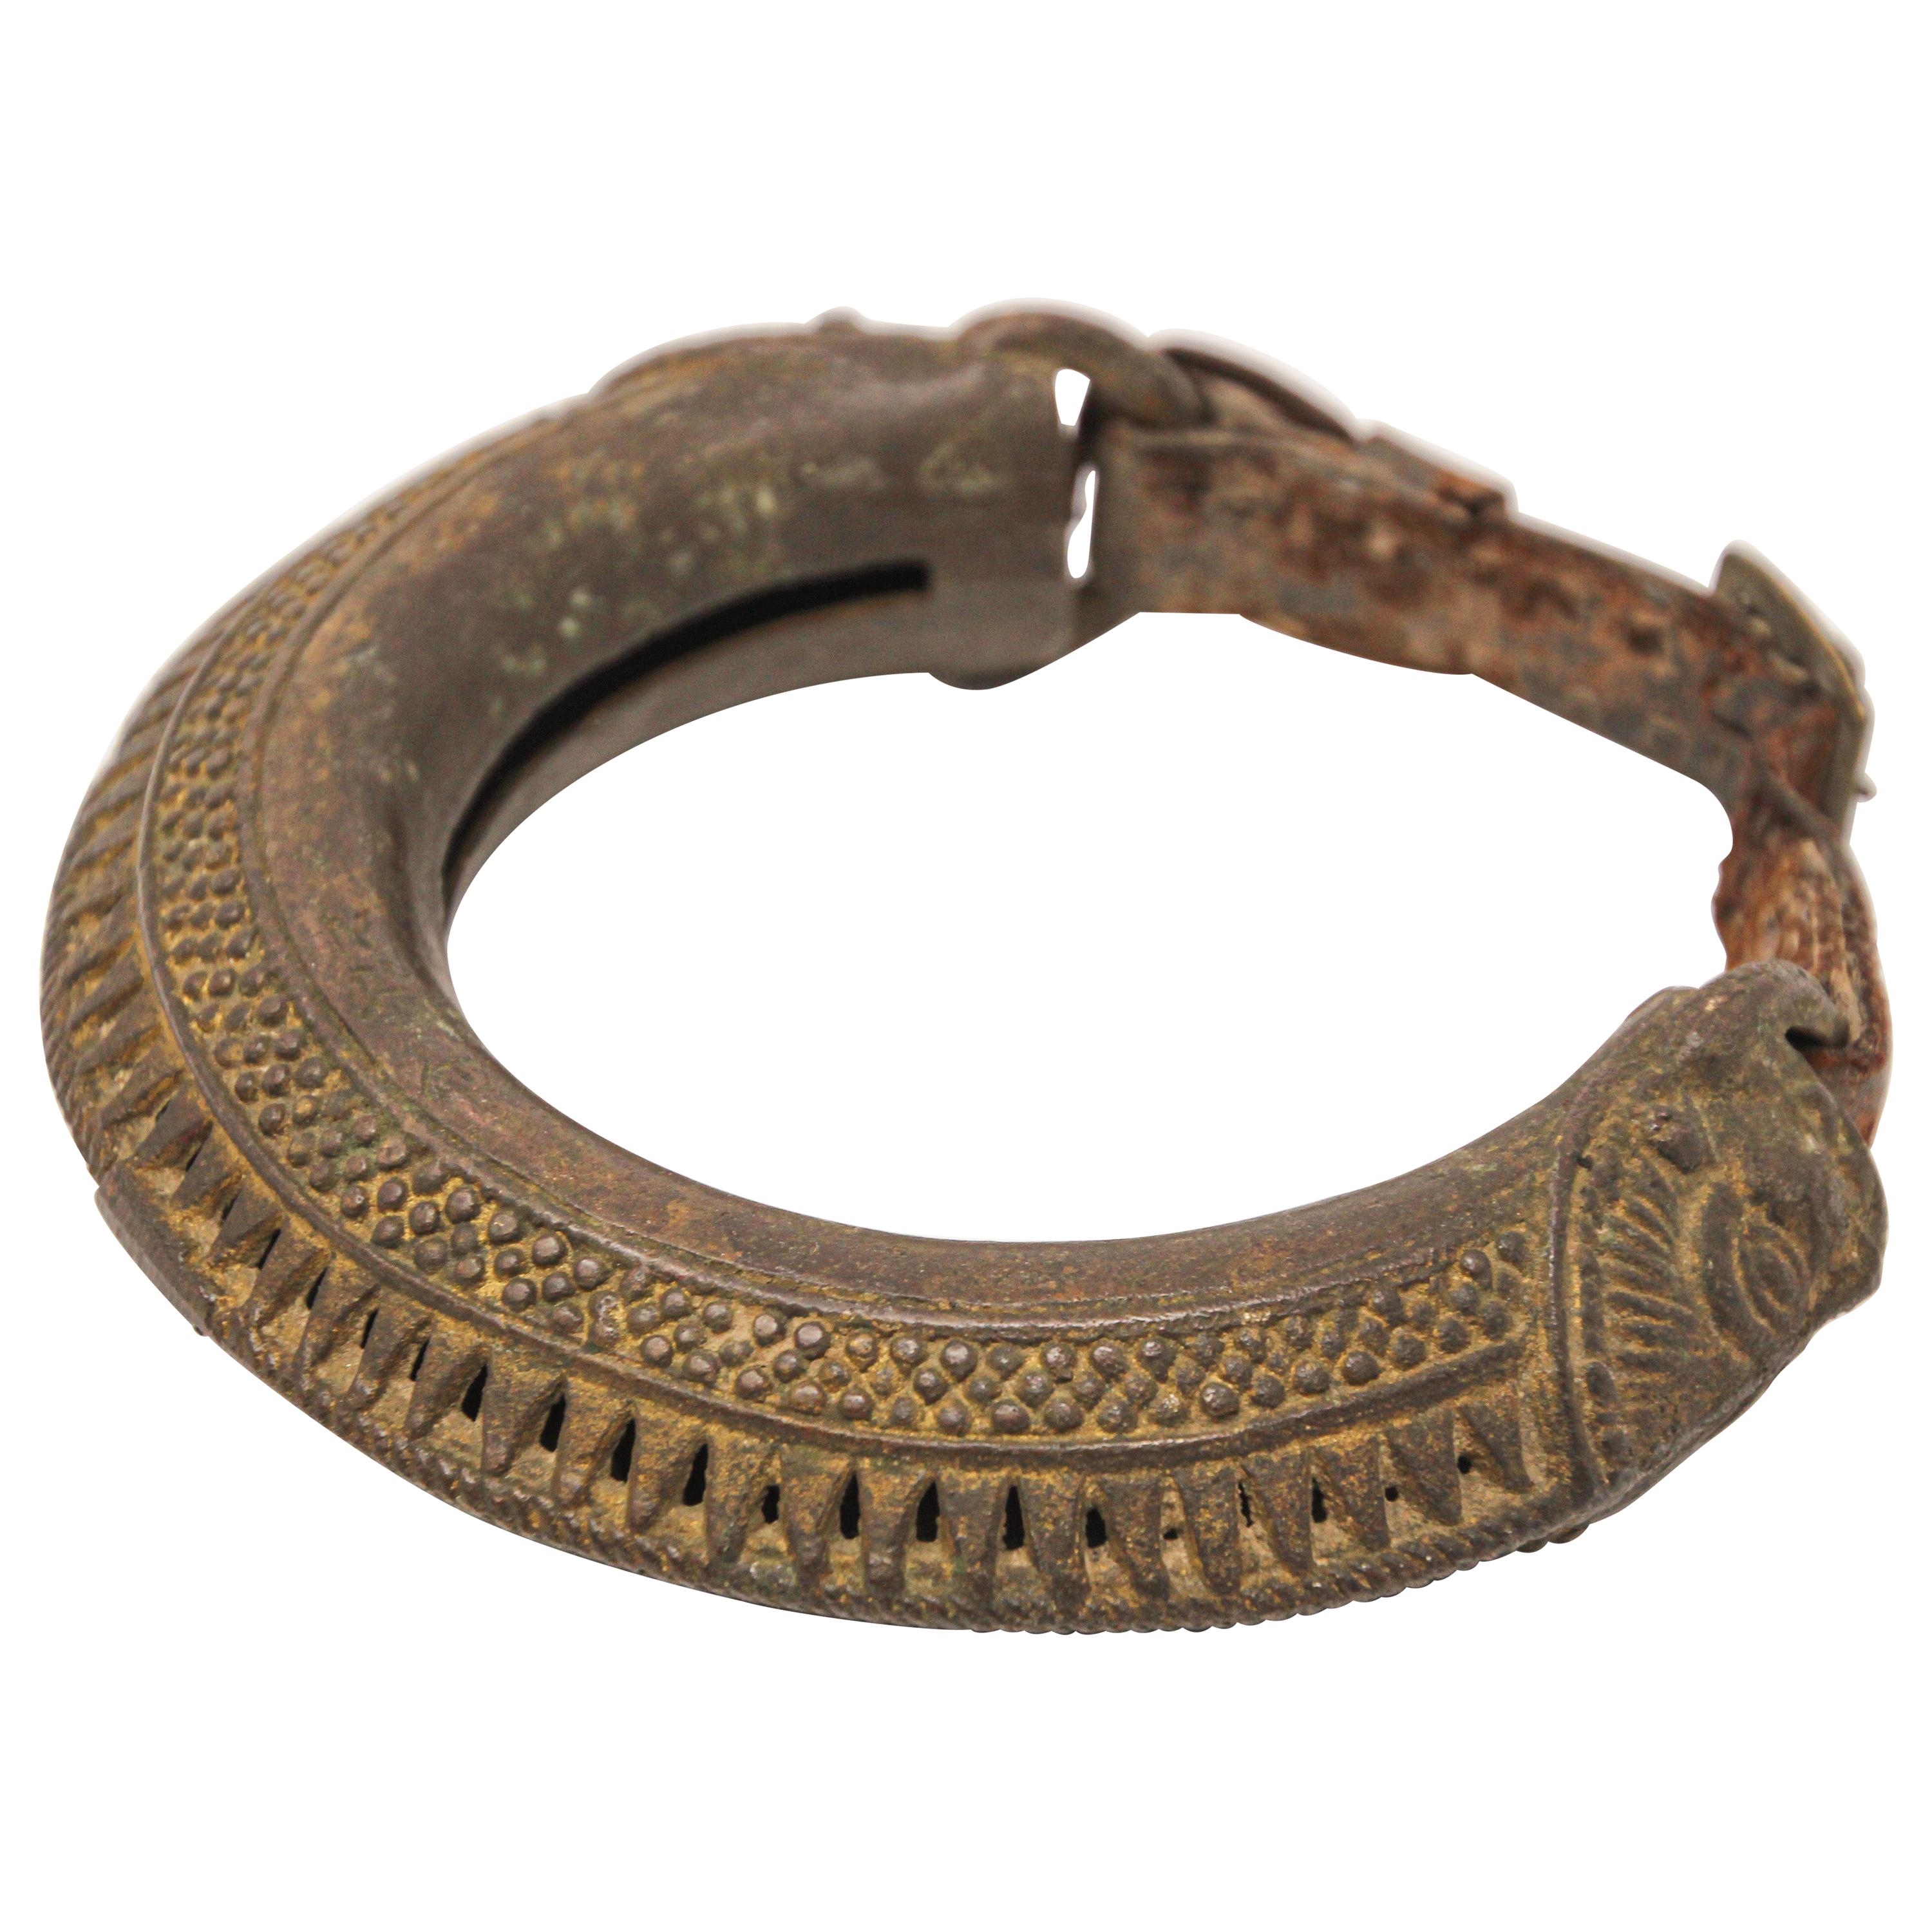 Bracelet tribal camel en bronze moulé